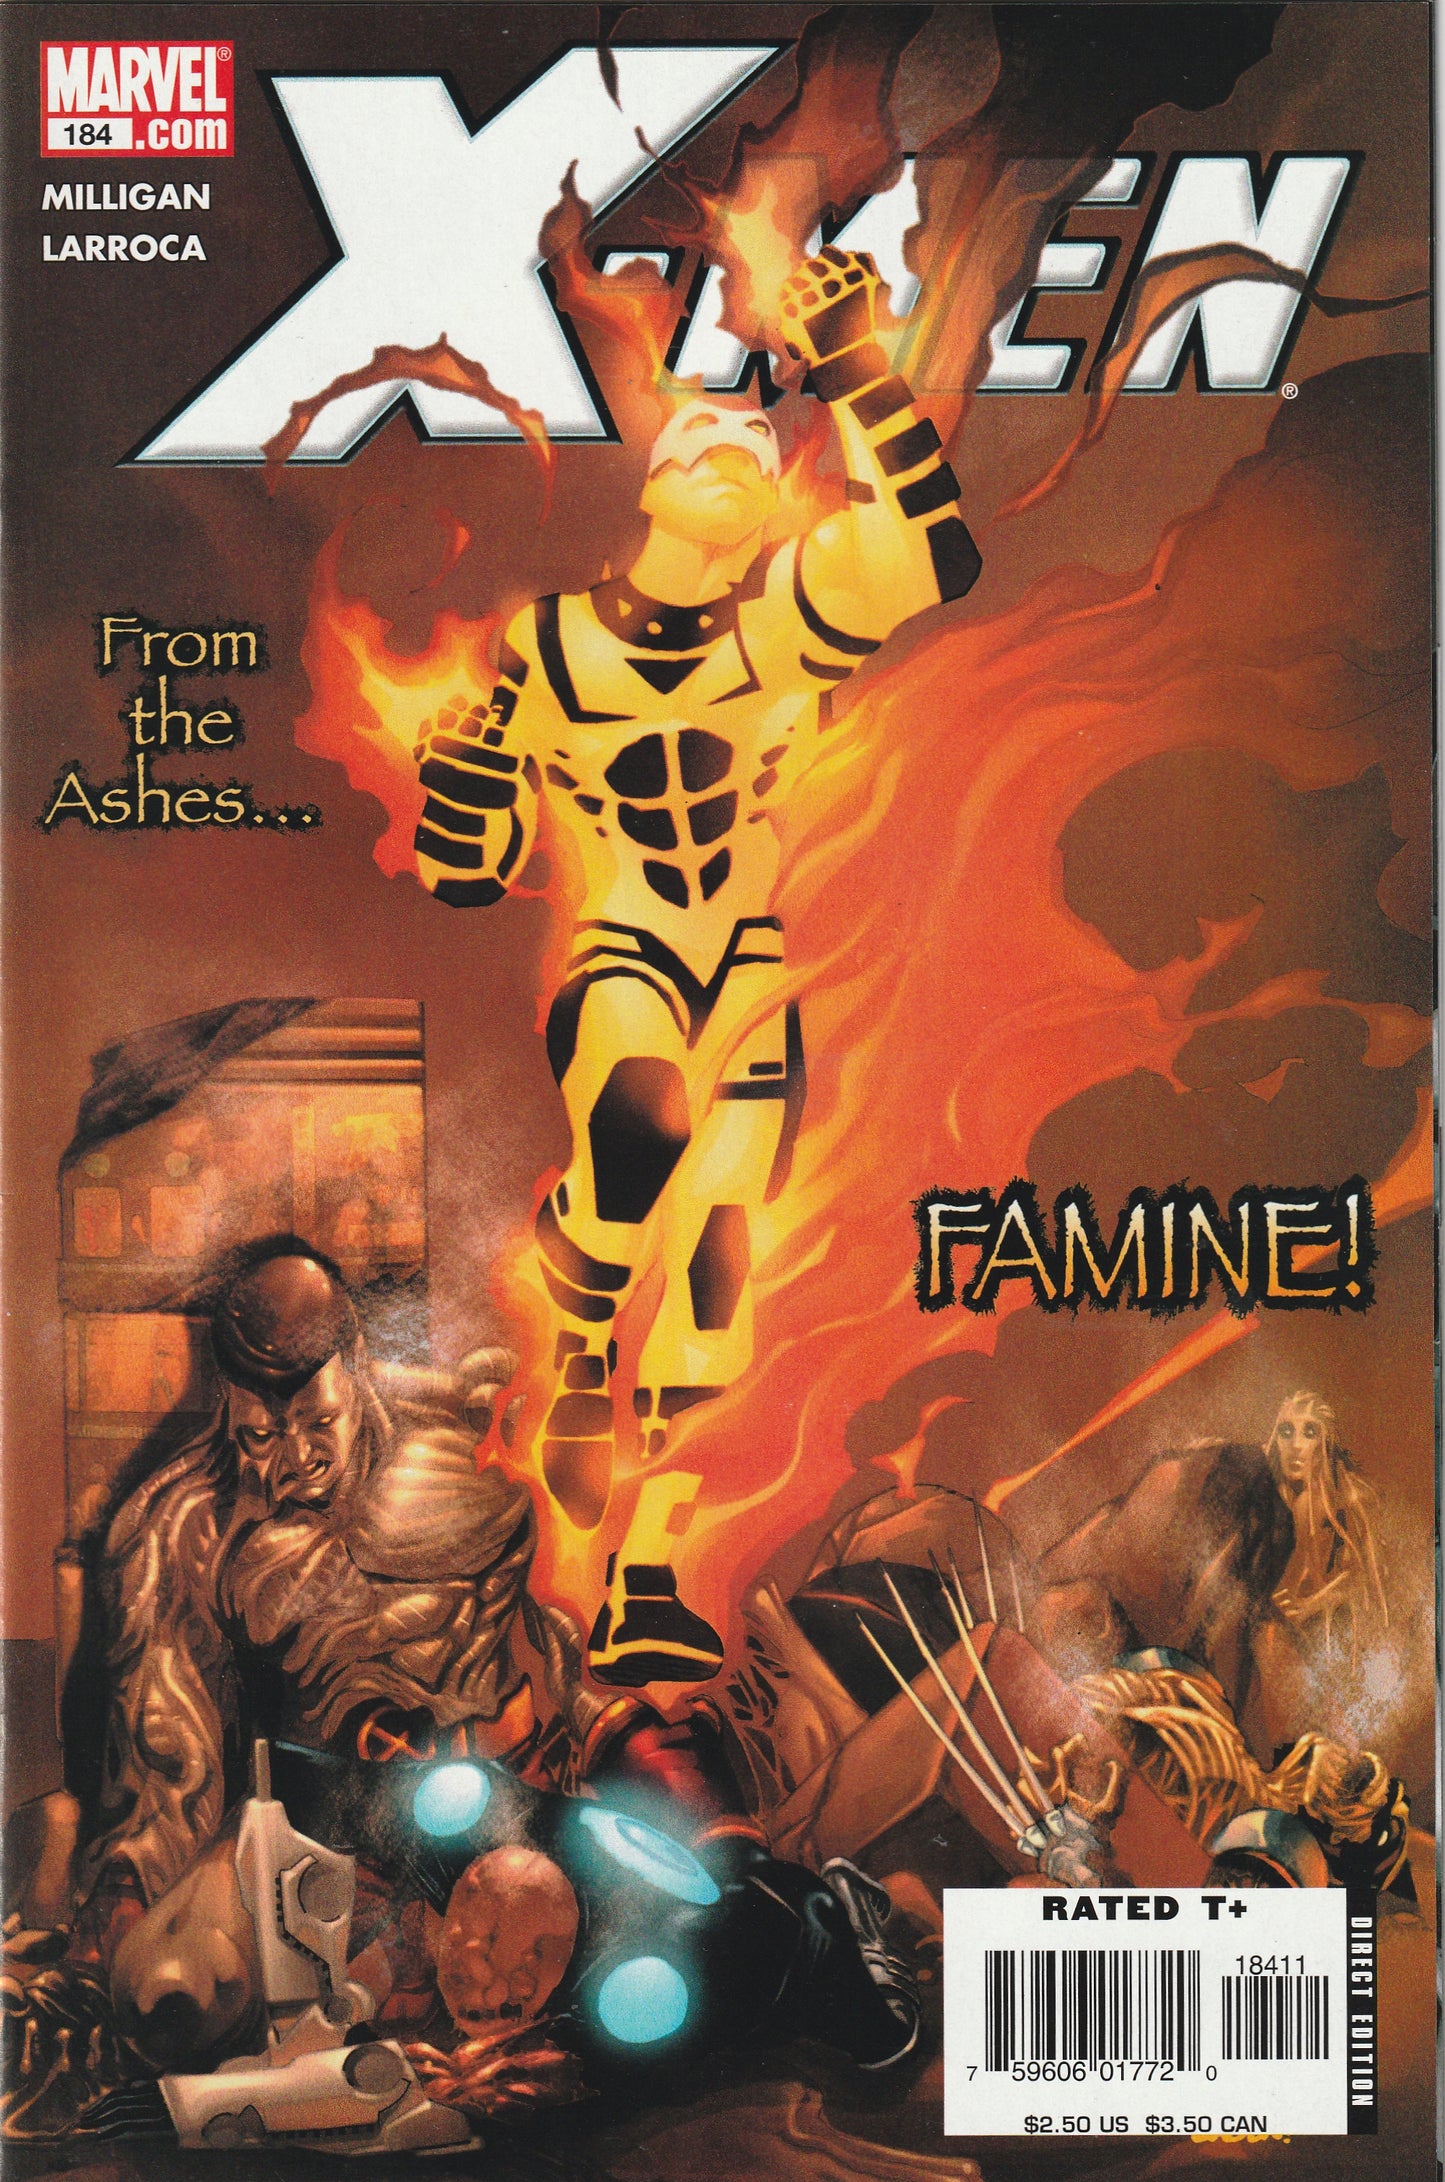 X-Men #184 (2006)